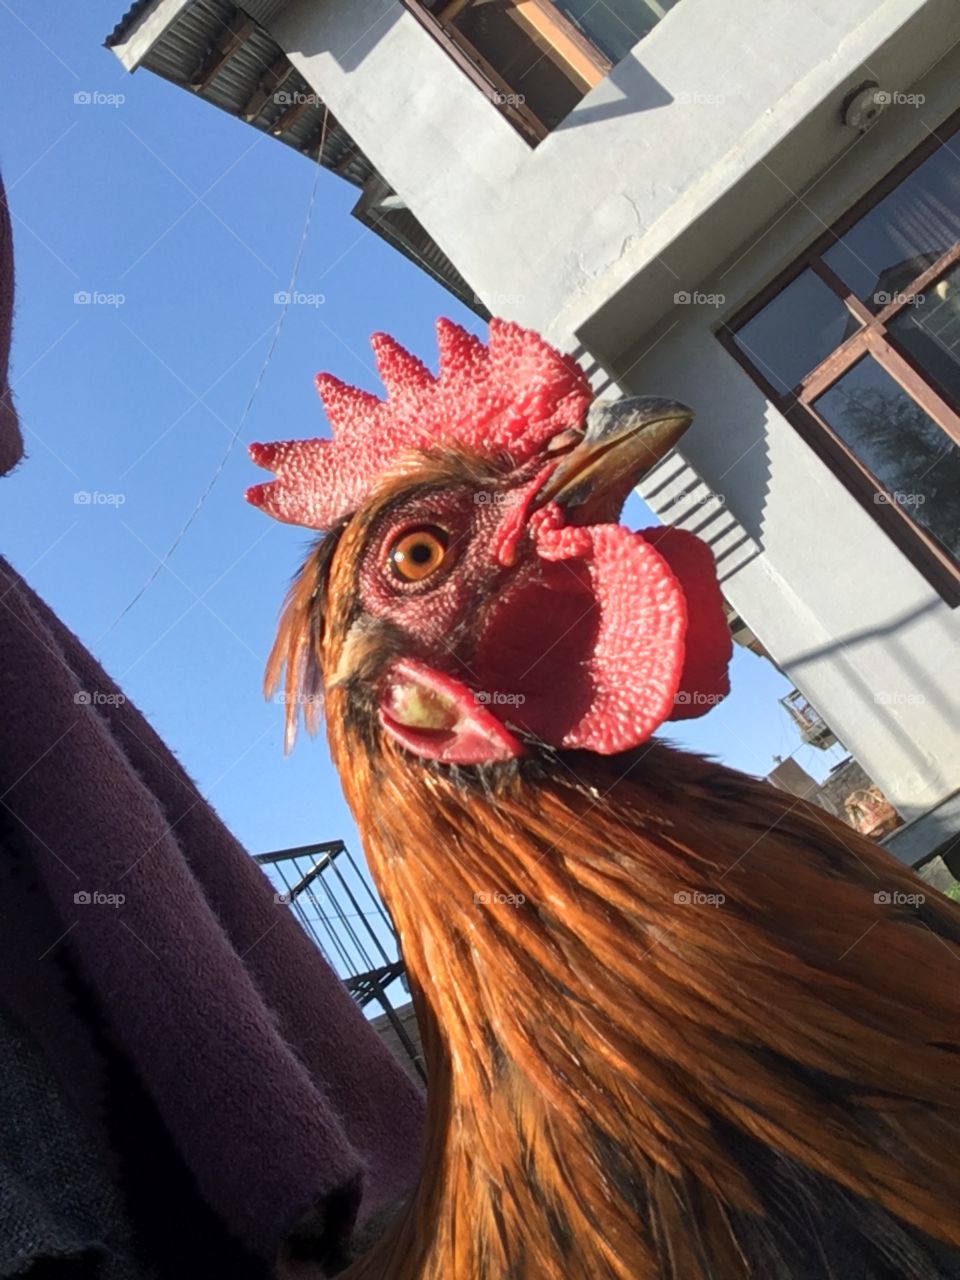 Selfie with cock